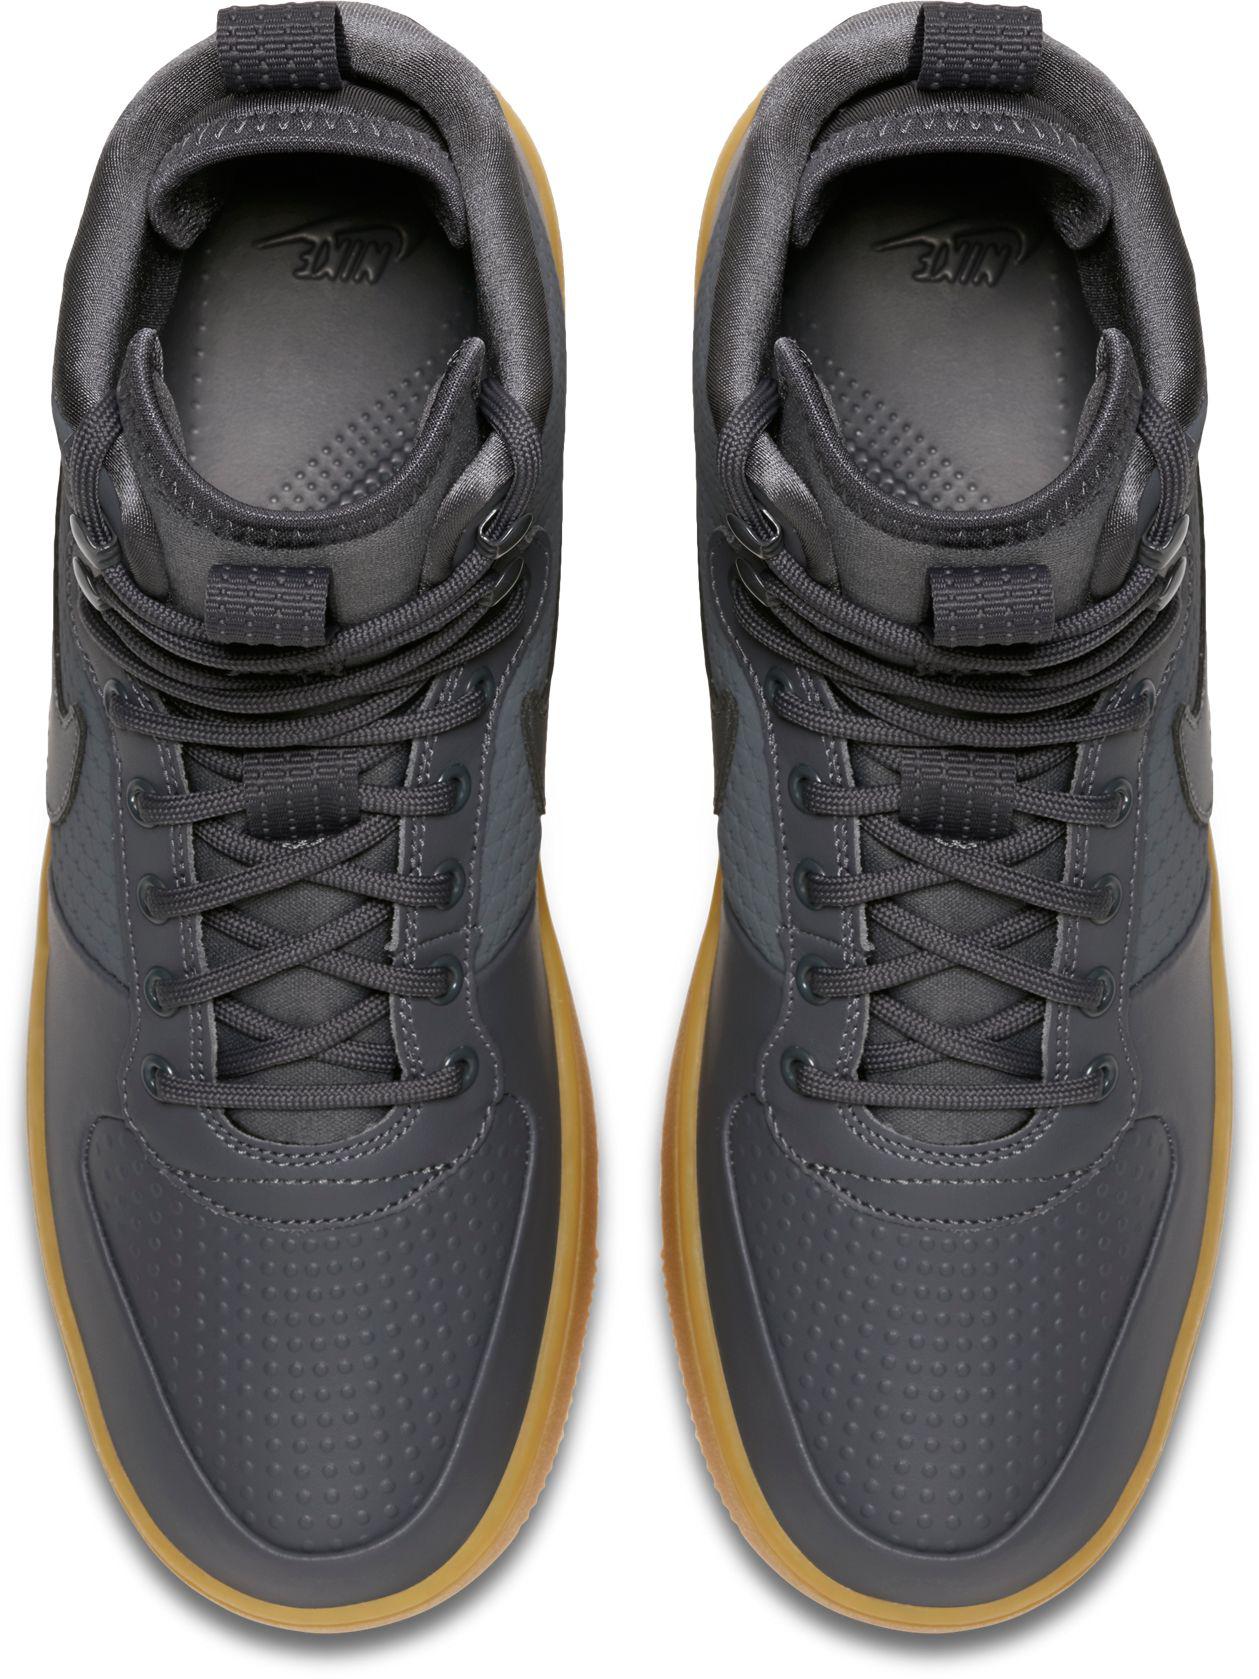 Nike Neoprene Court Borough Mid Winter Shoes in Dark Grey (Gray) for Men -  Lyst